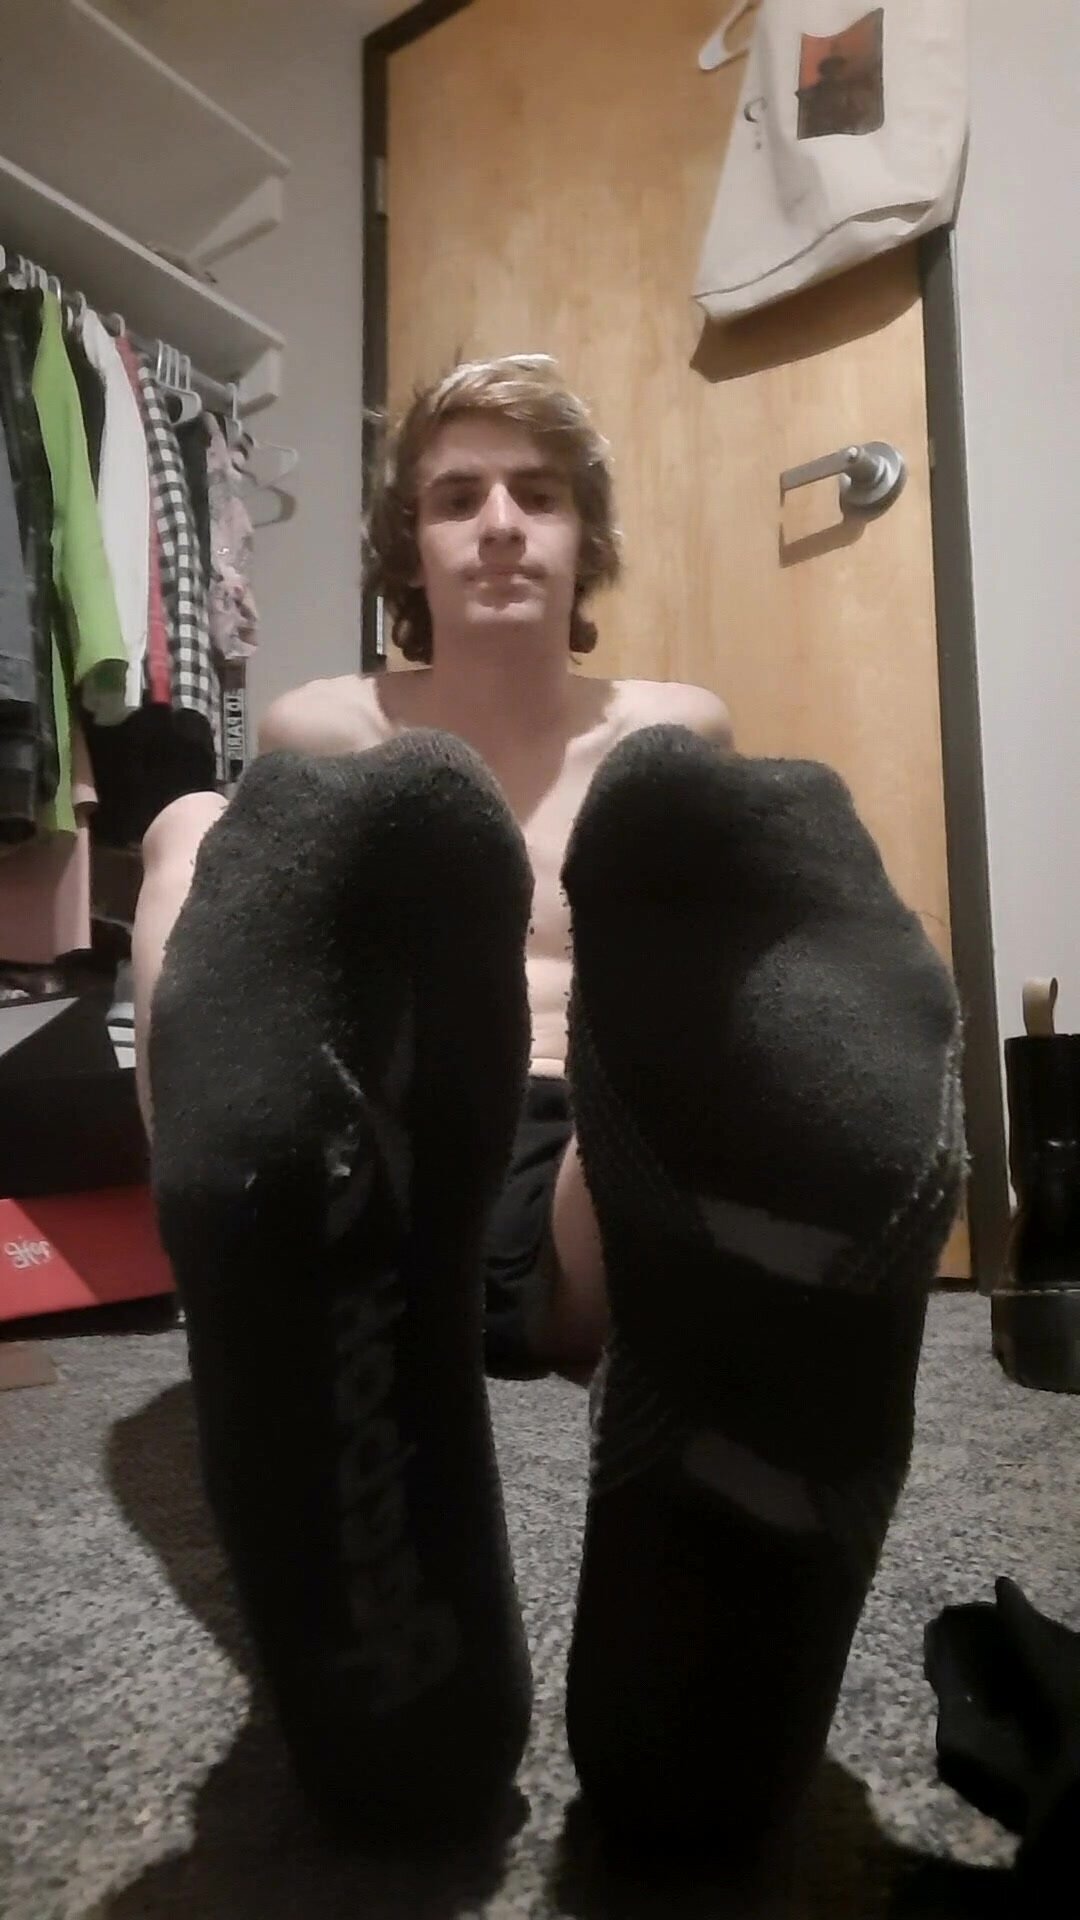 D1 Jock shows off sweaty feet and 2 week old socks PREV